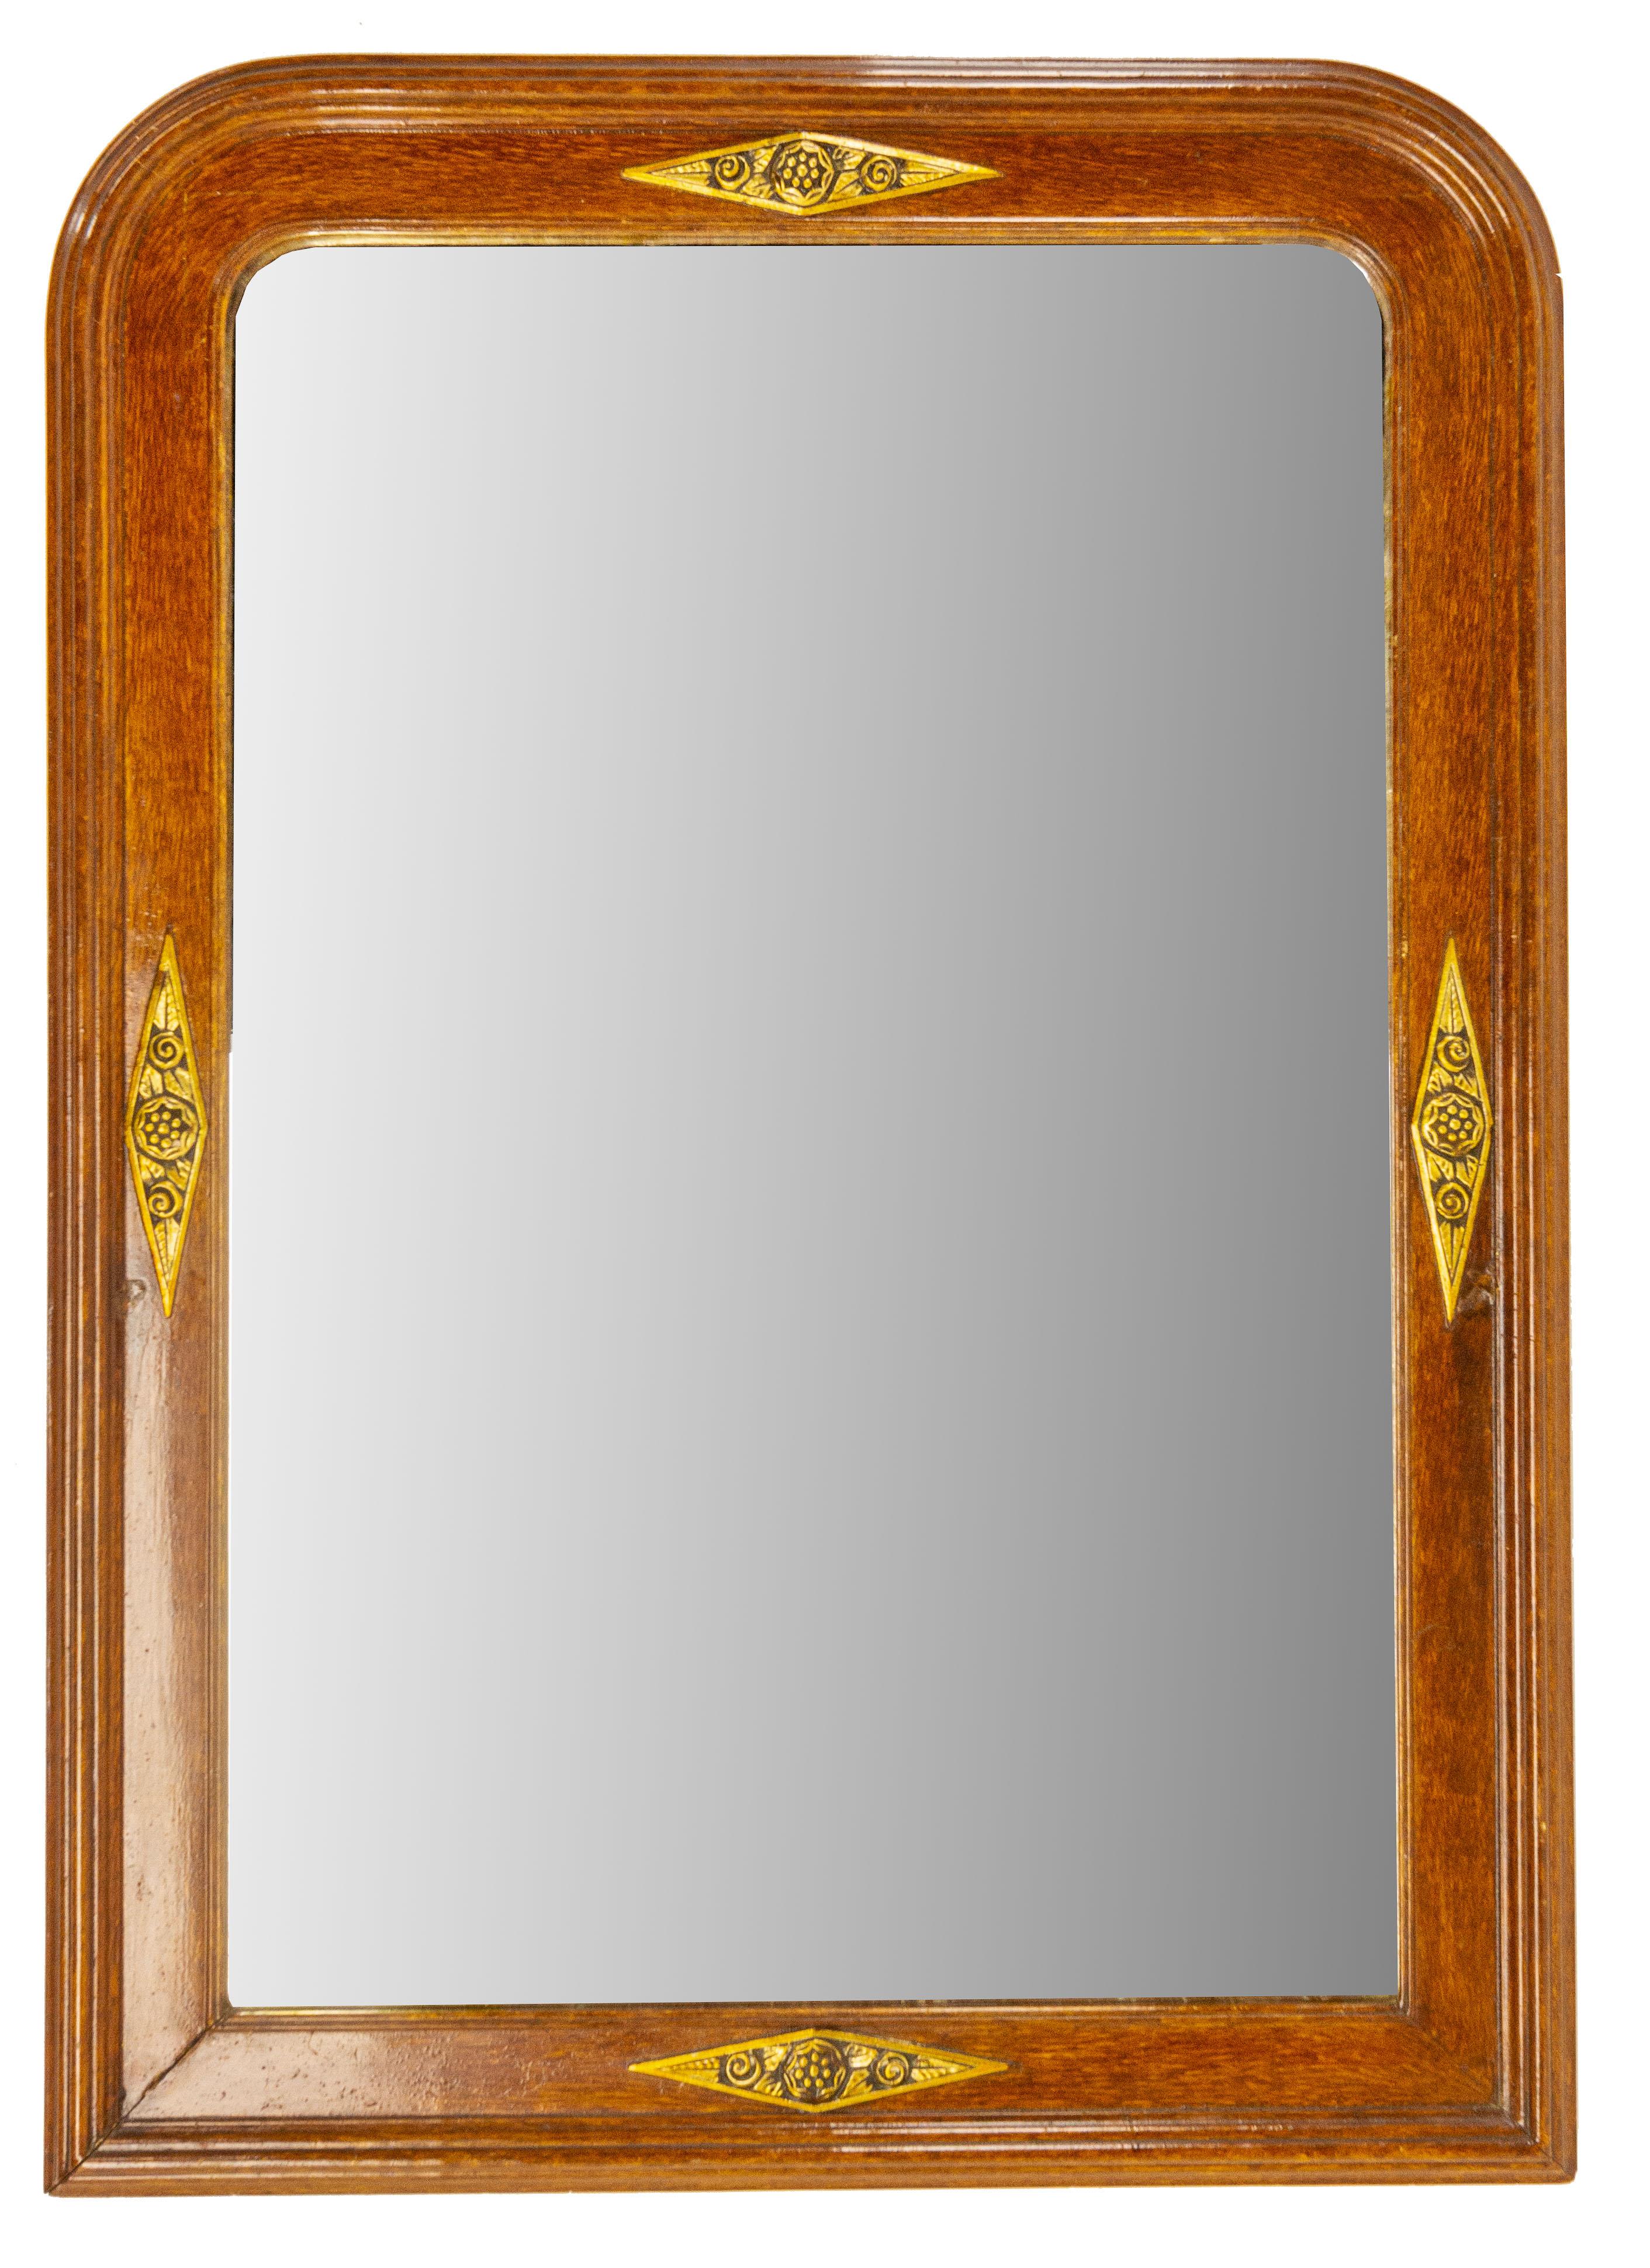 Art Déco Stucco mirror,
Wood imitation and floral motifs on the golden parts.
Original mirror.
Good antique condition.

Shipping:
L 68,5 P 3 H 96 9,2 KG.